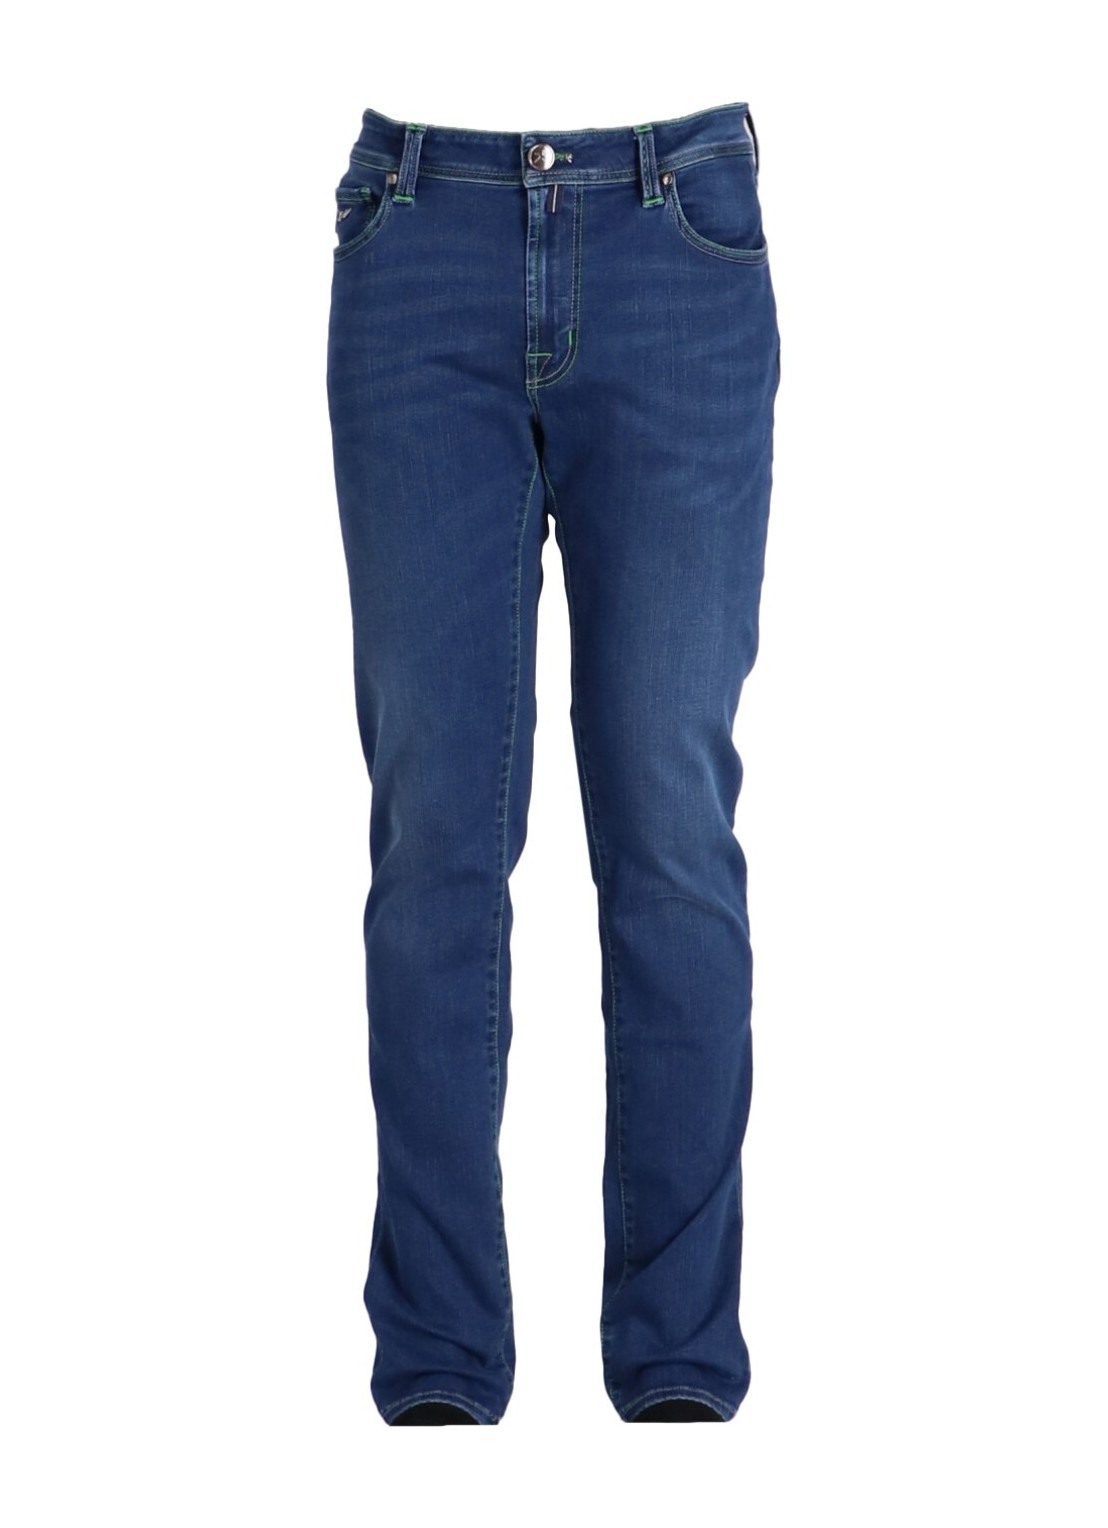 Pantalon jeans tramarossa denim man leonardo zip stre leonardo zip stre 23i15 talla 34
 